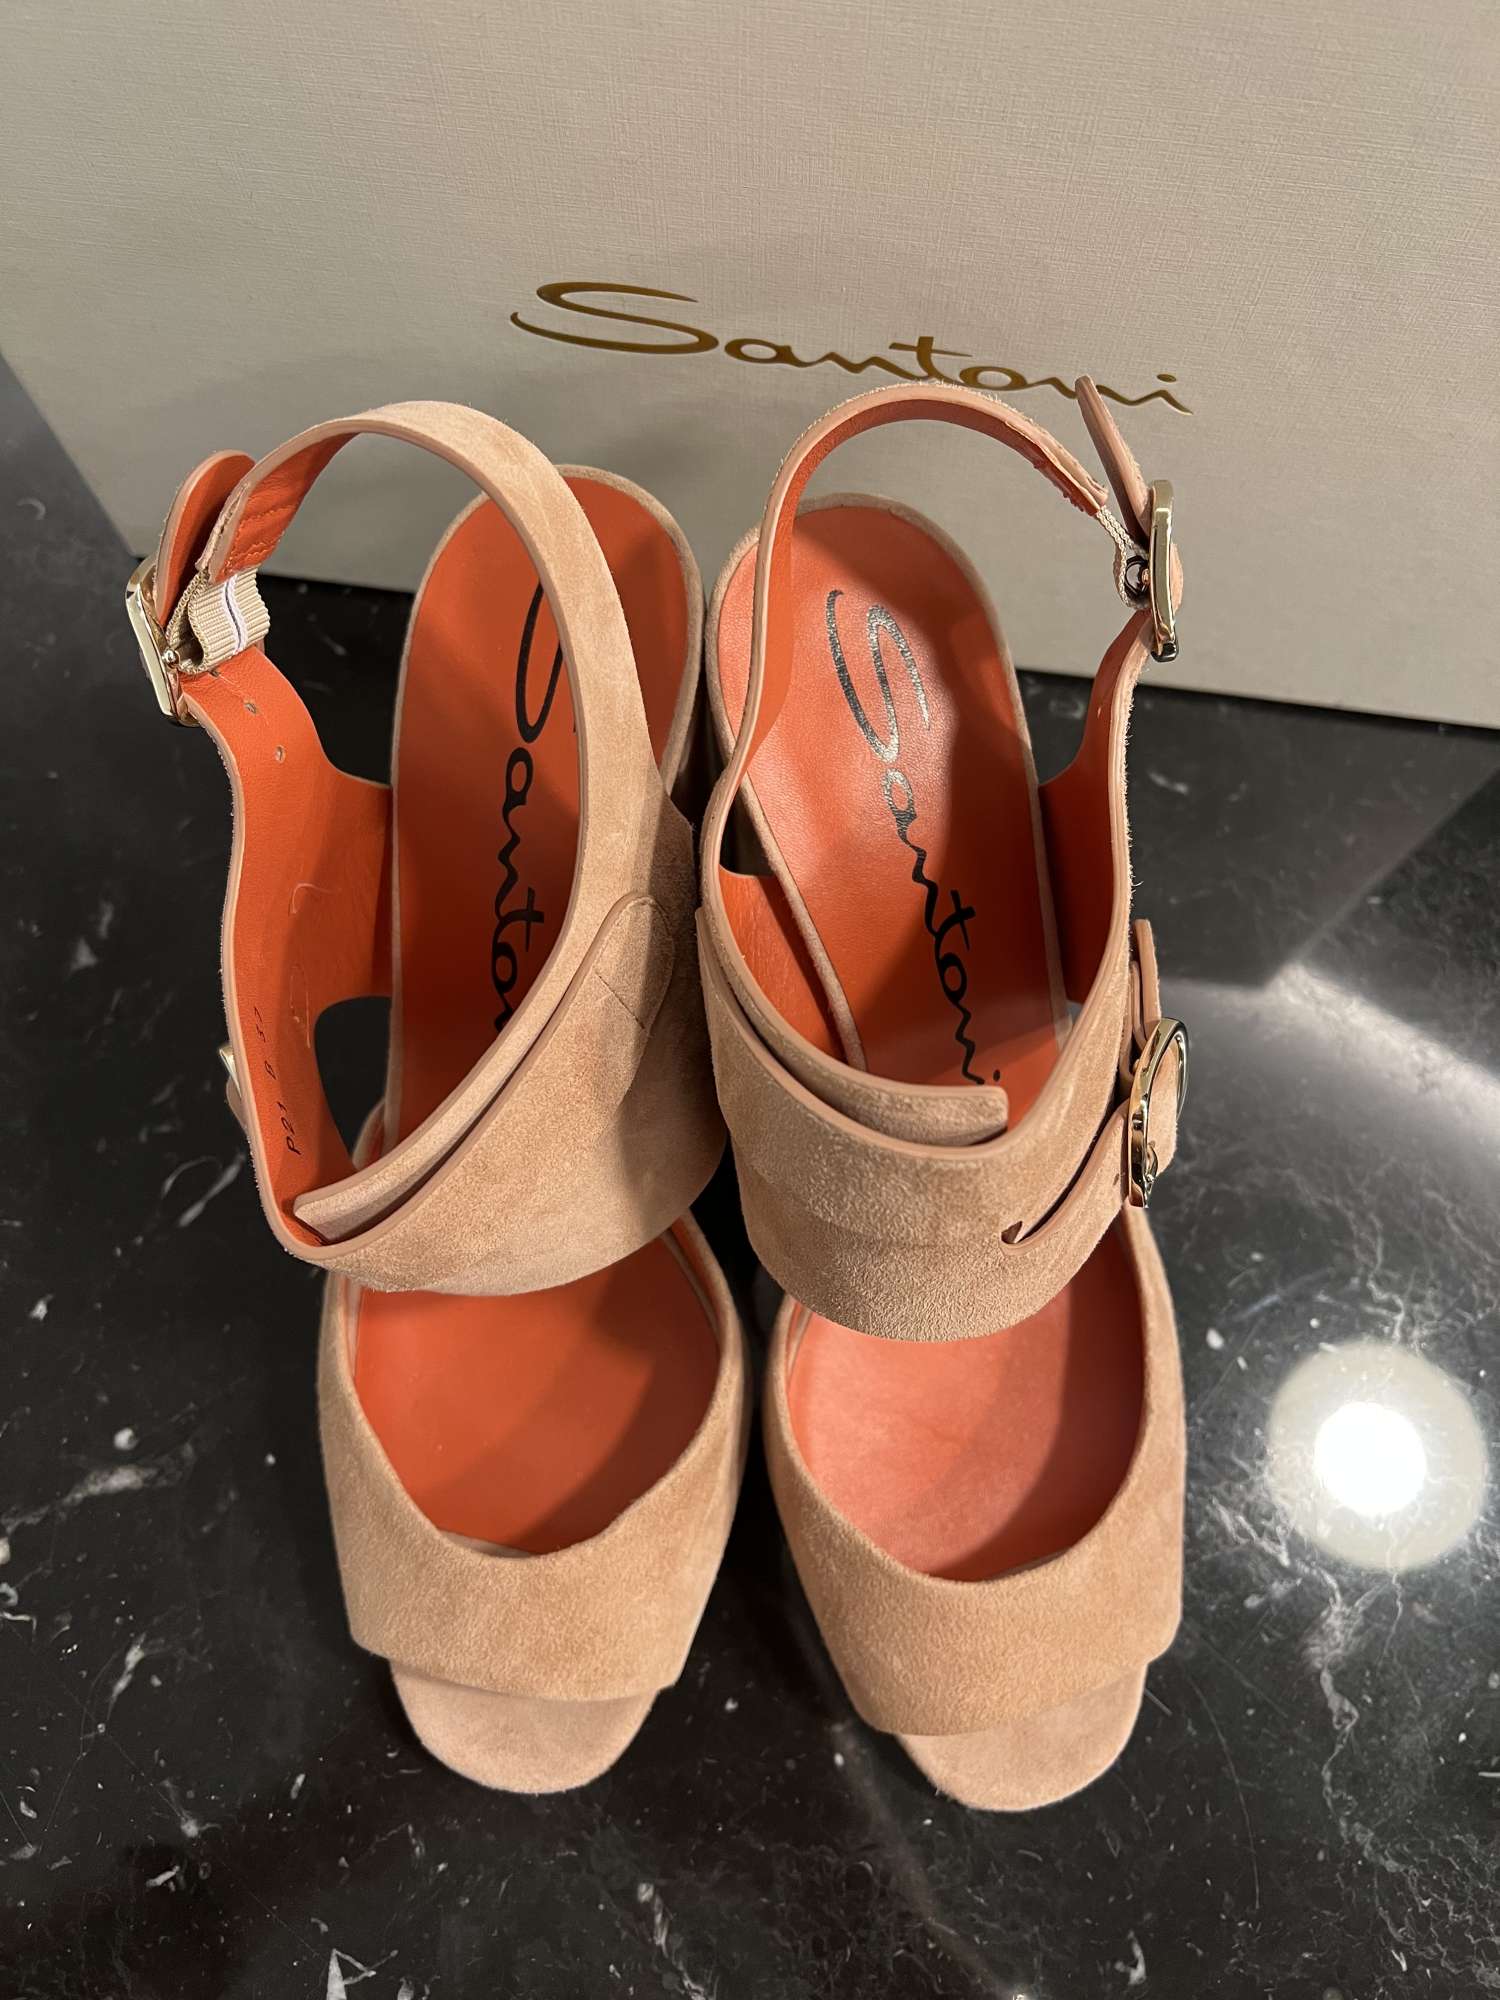 Santoni sandalky